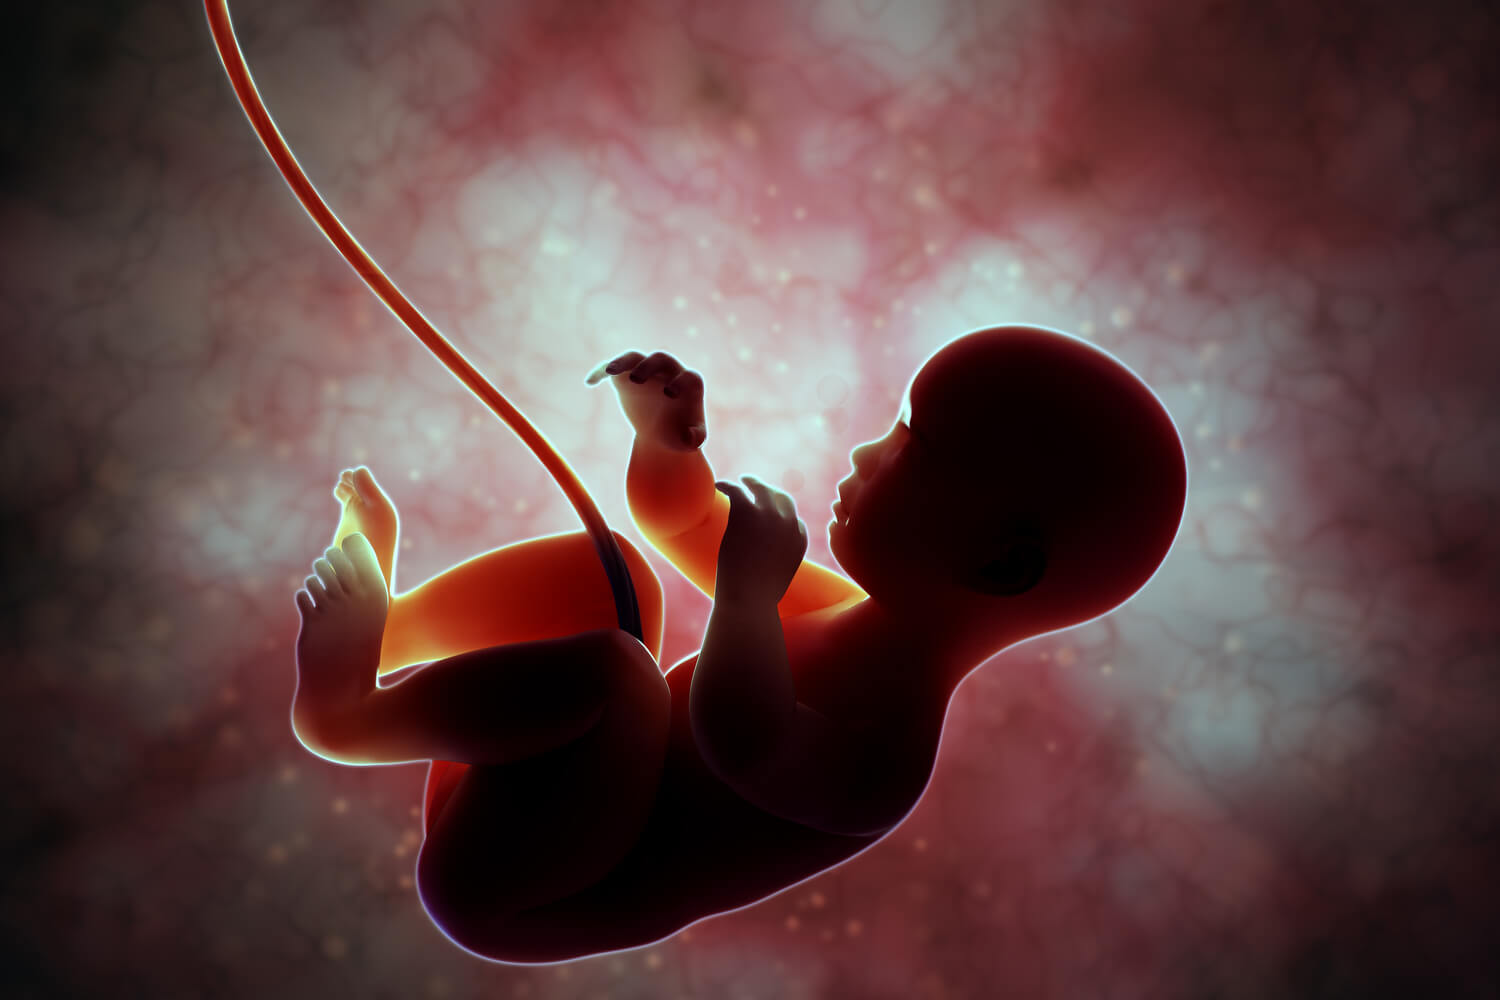 Fetal Anemia During Pregnancy